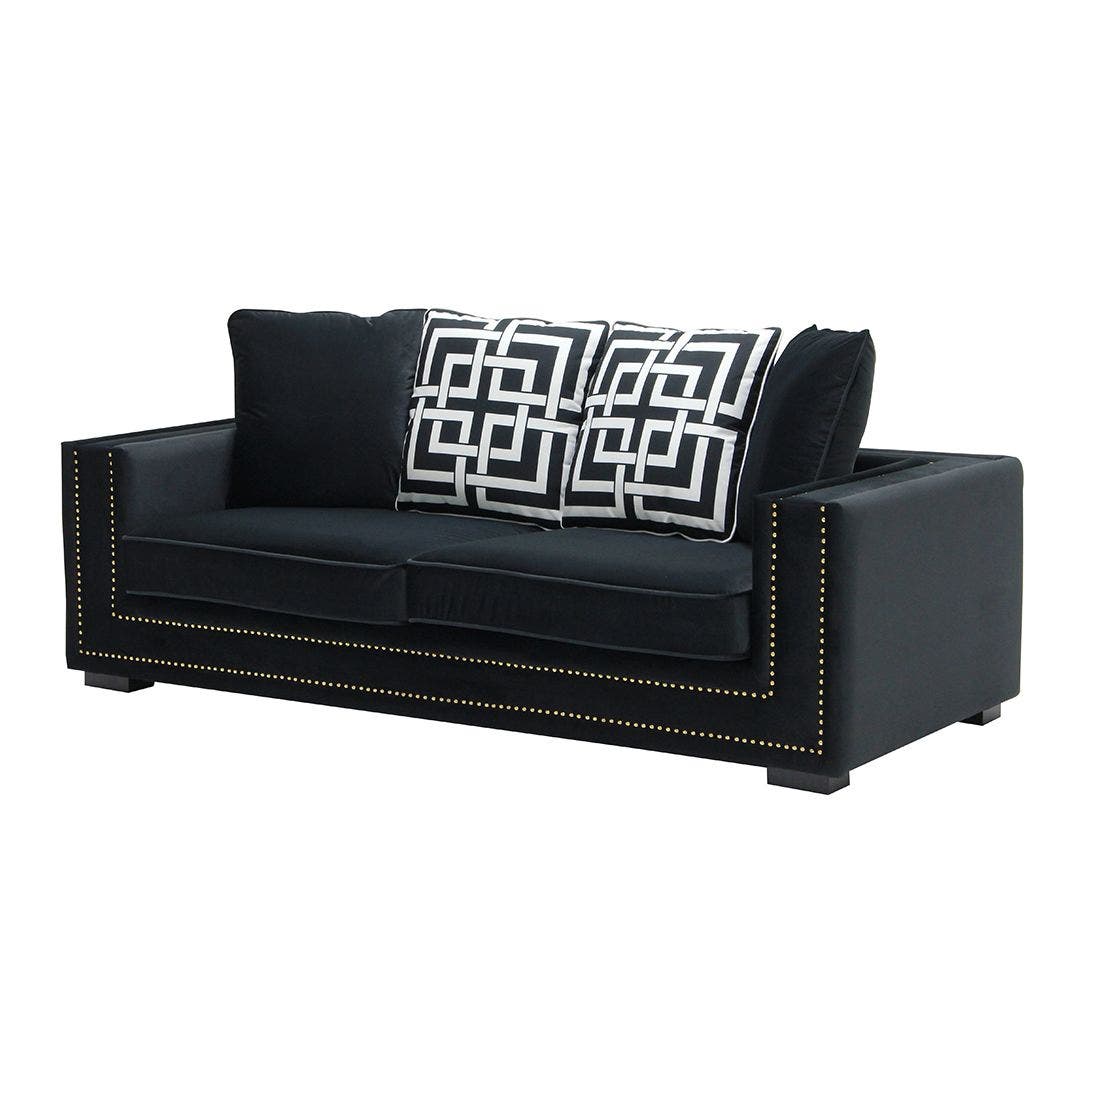 Fabric sofa Harmona#2 3 seater Black สีดำ1